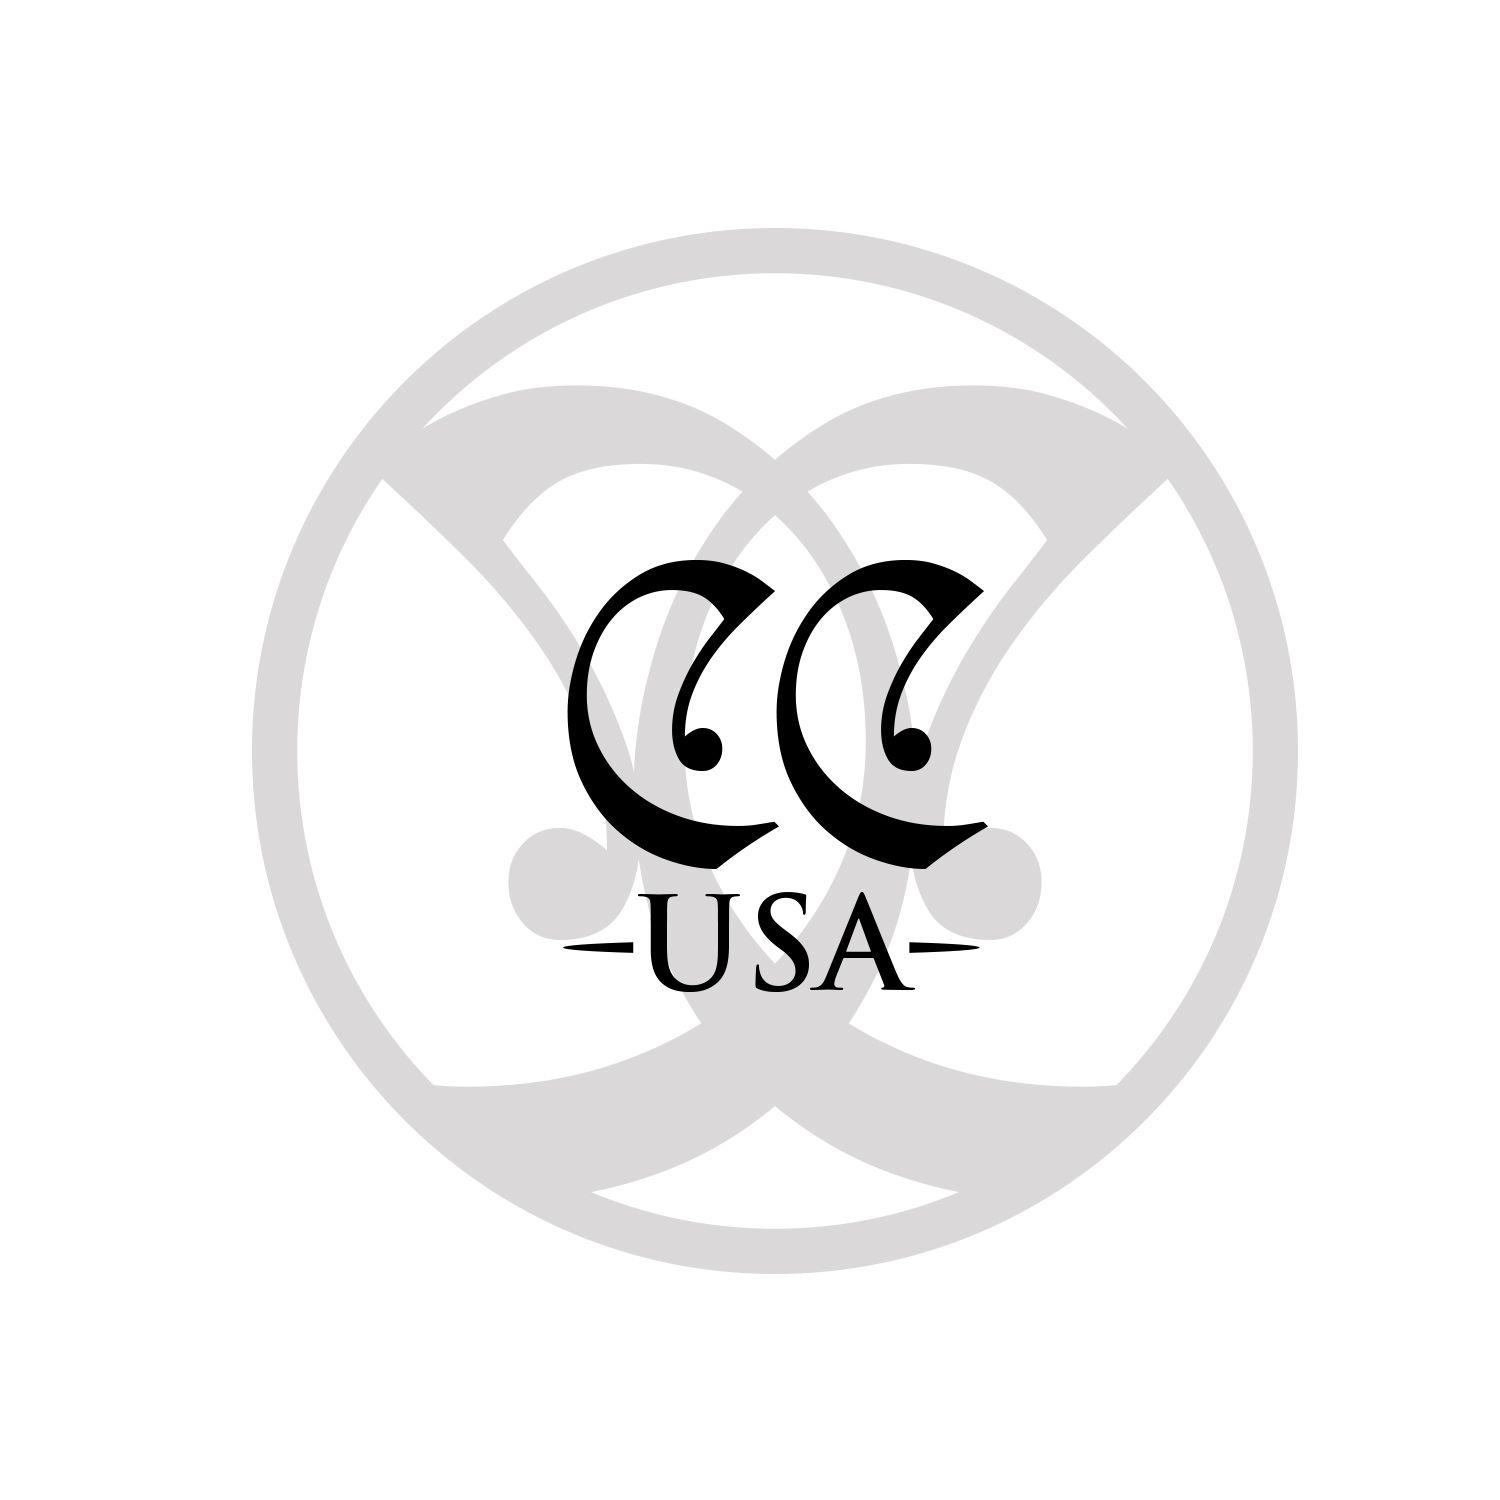 CC Fashion Logo - Feminine, Elegant, Fashion Logo Design For CC USA By Maria Kaz